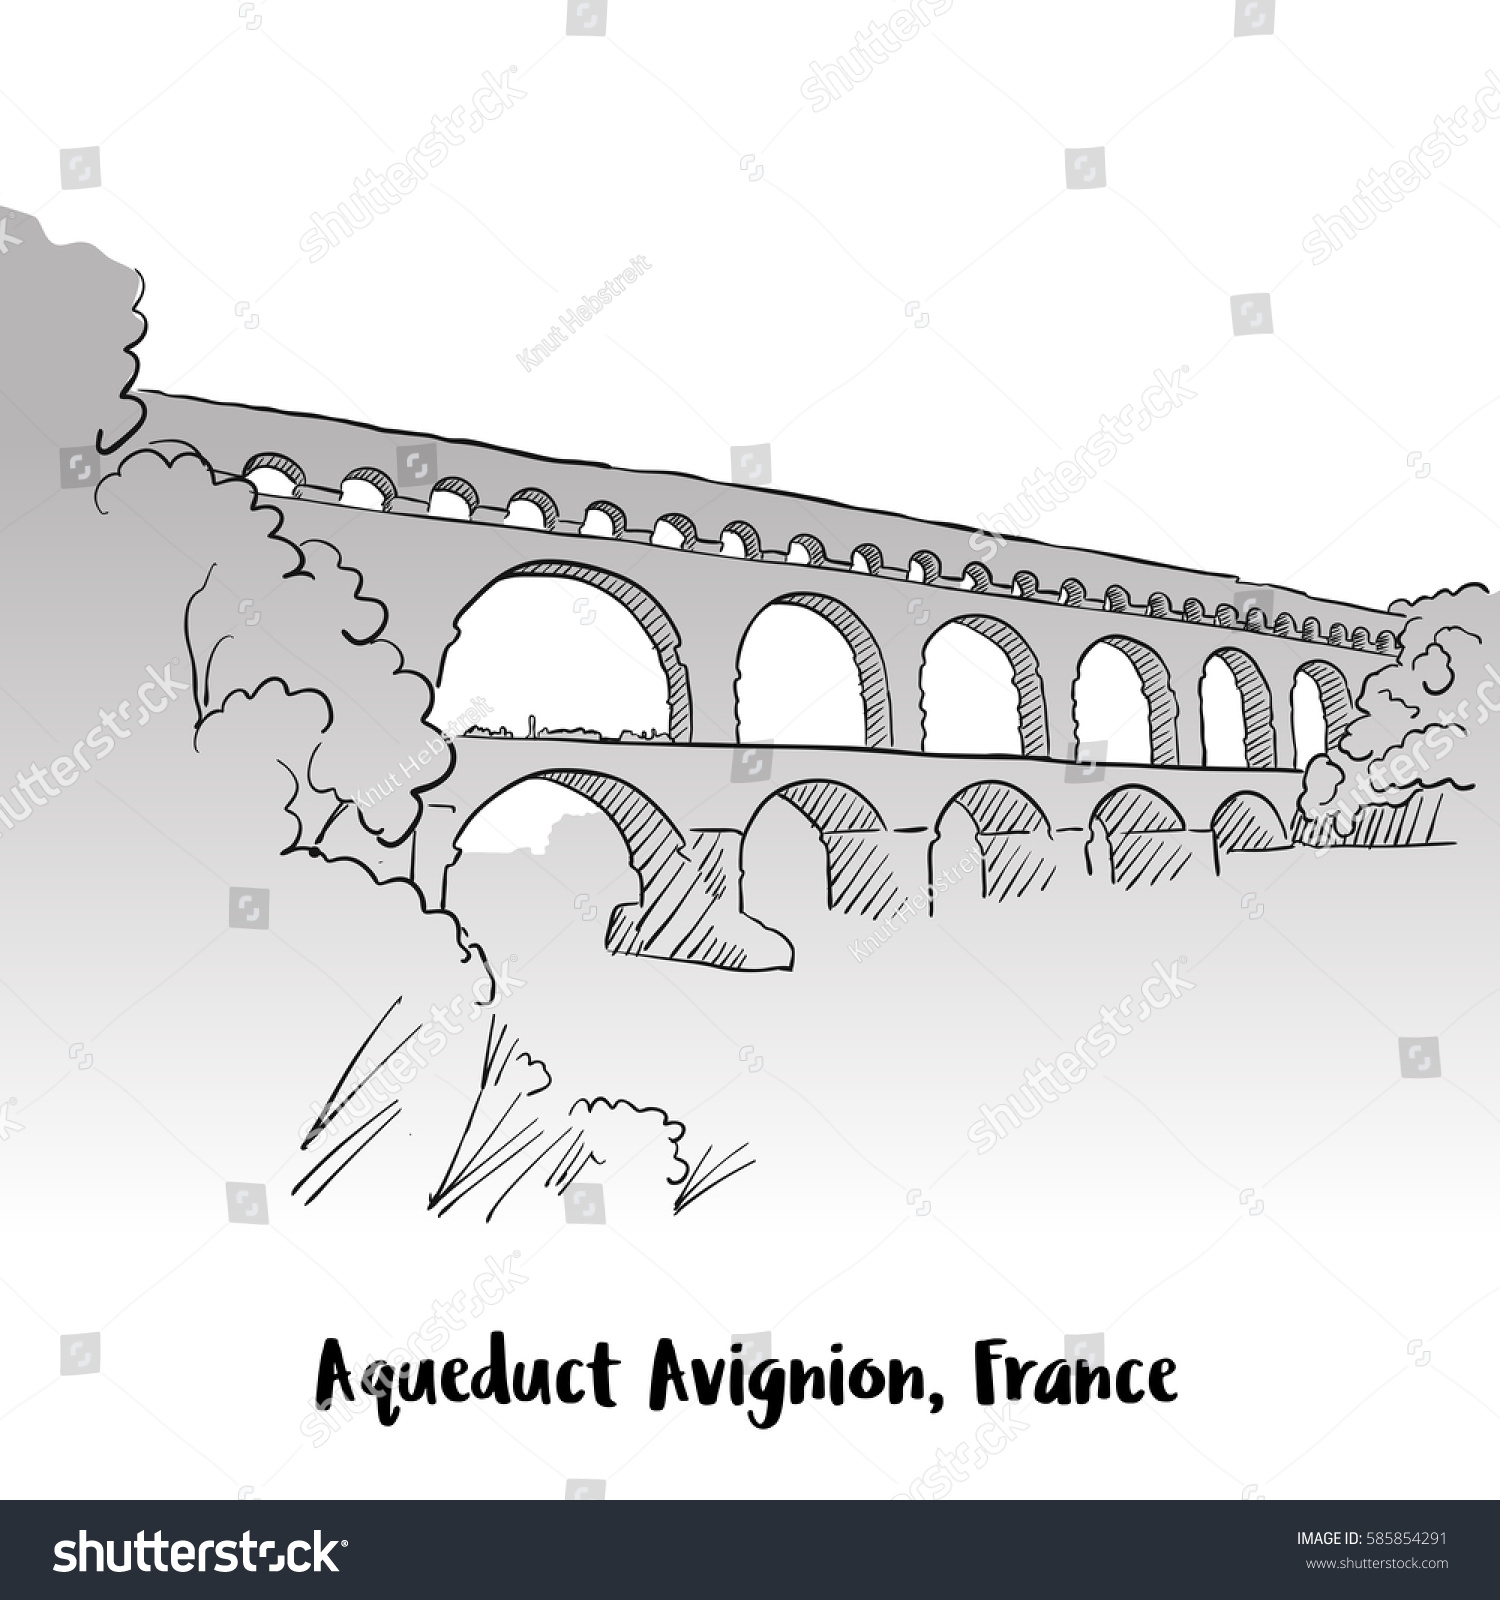 SVG of Aqueduct Avignion, France Greeting Card Design, Hand-drawn Vector Outline Sketch svg